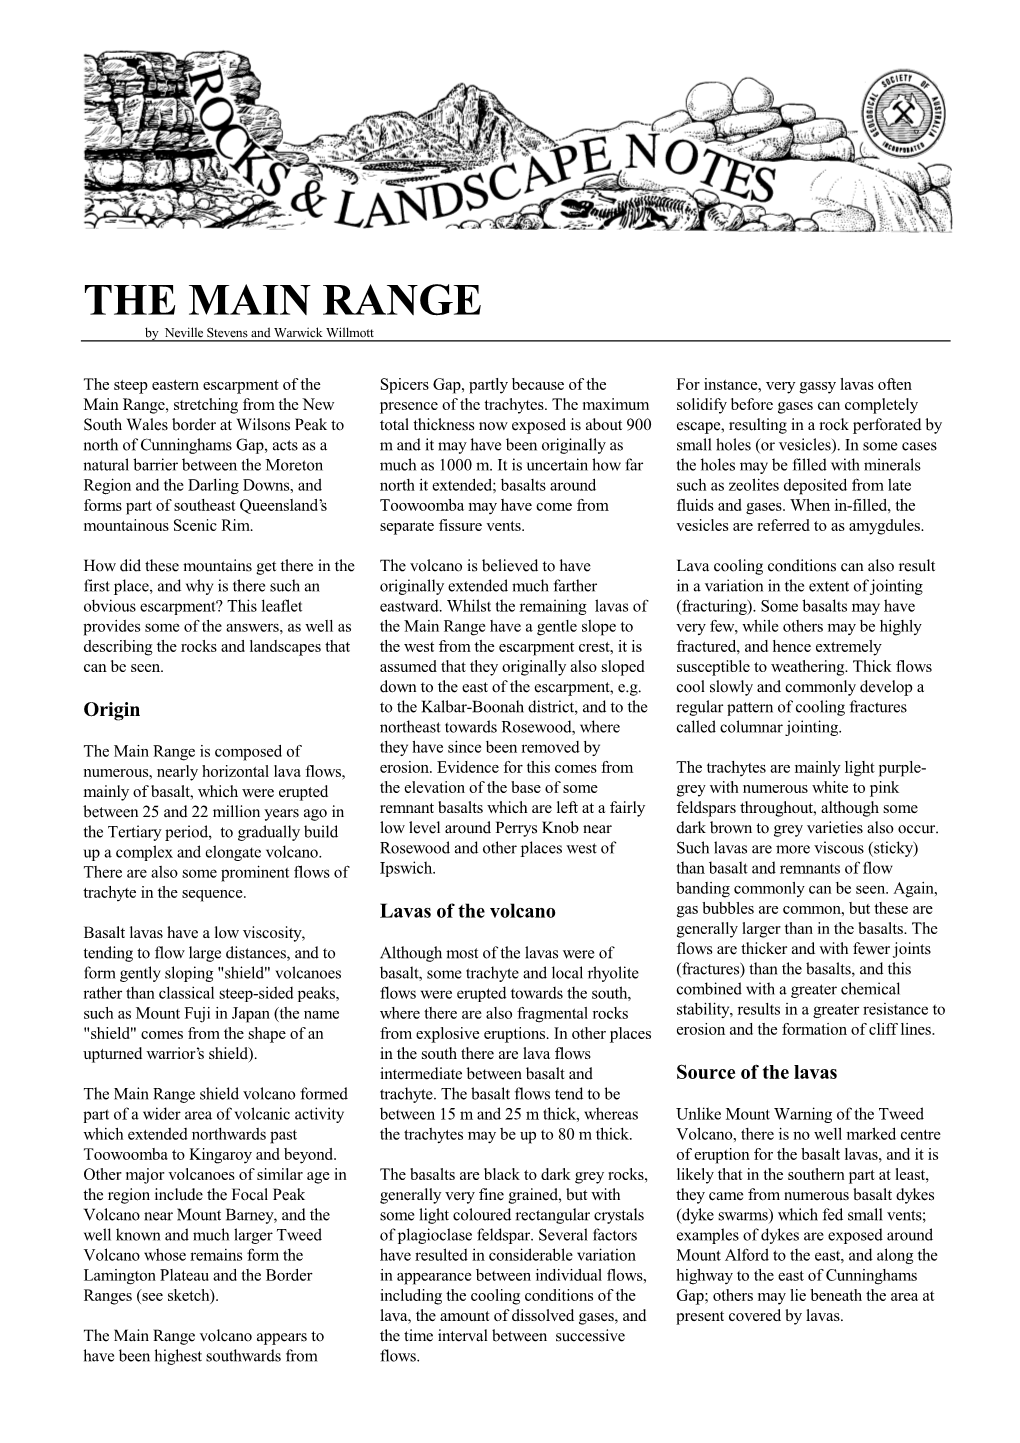 THE MAIN RANGE by Neville Stevens and Warwick Willmott